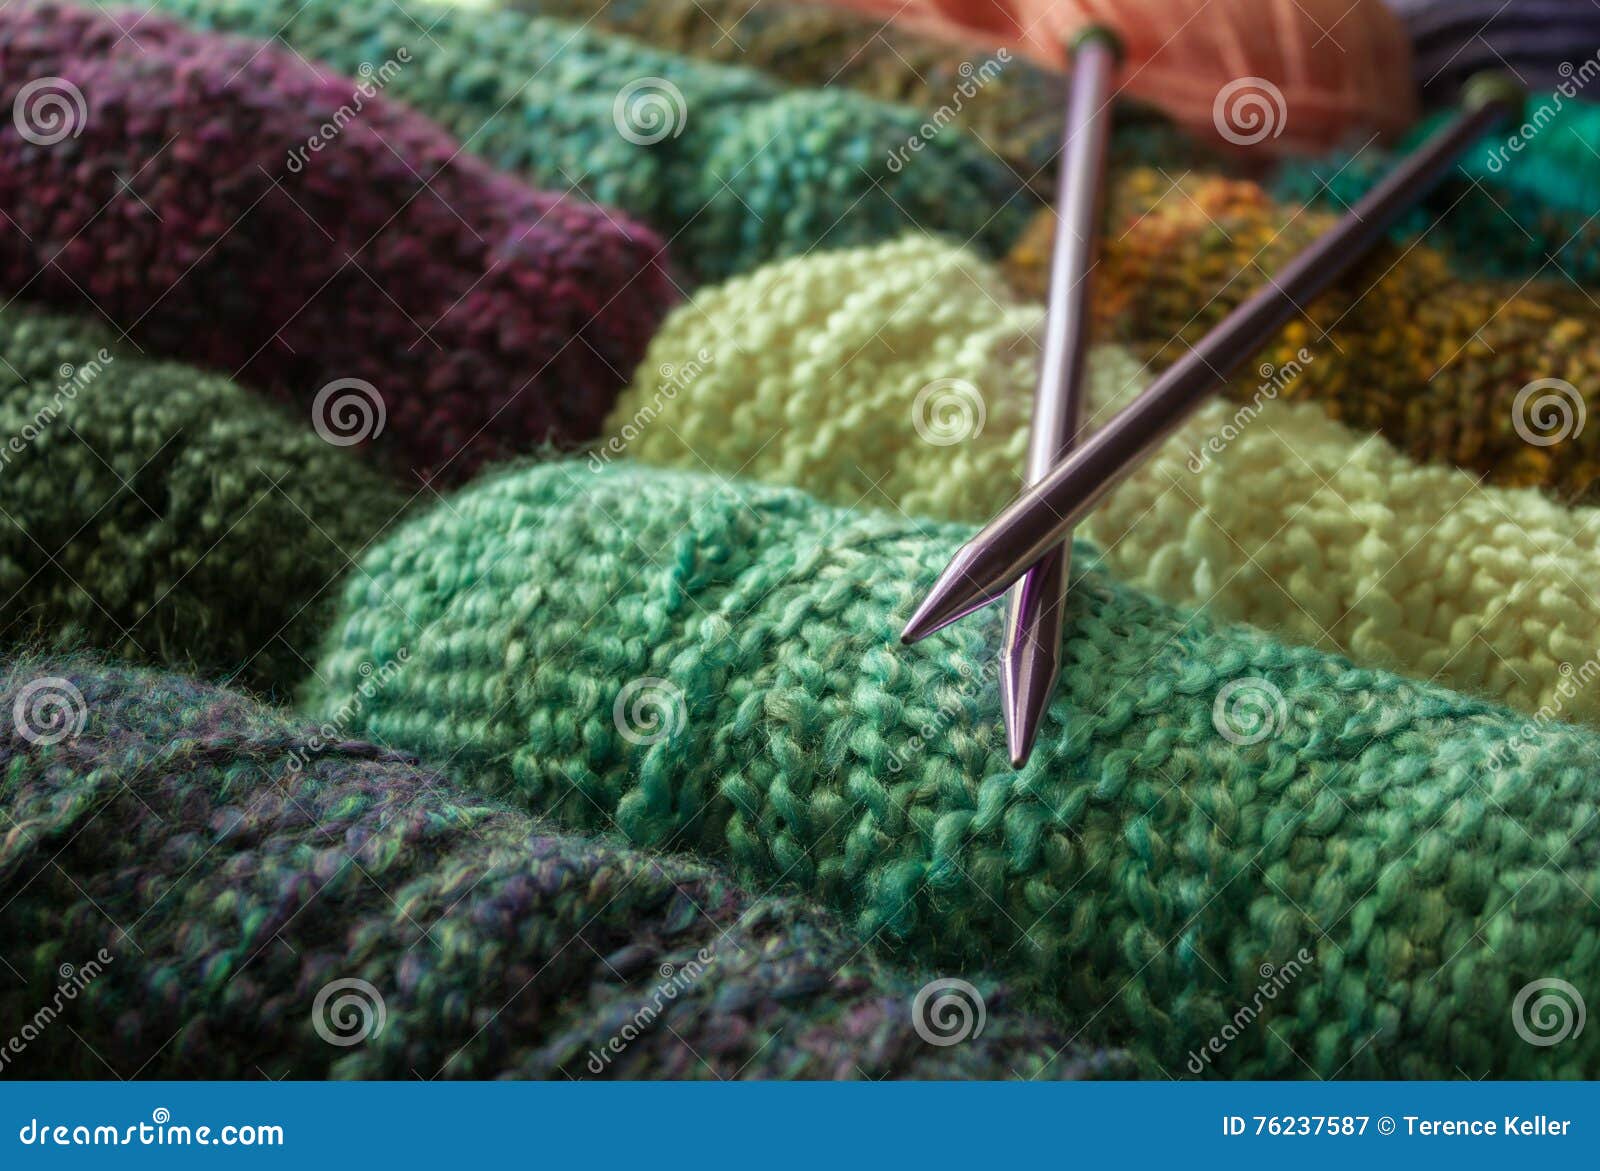 Knitting Supplies stock image. Image of maker, close - 76237587